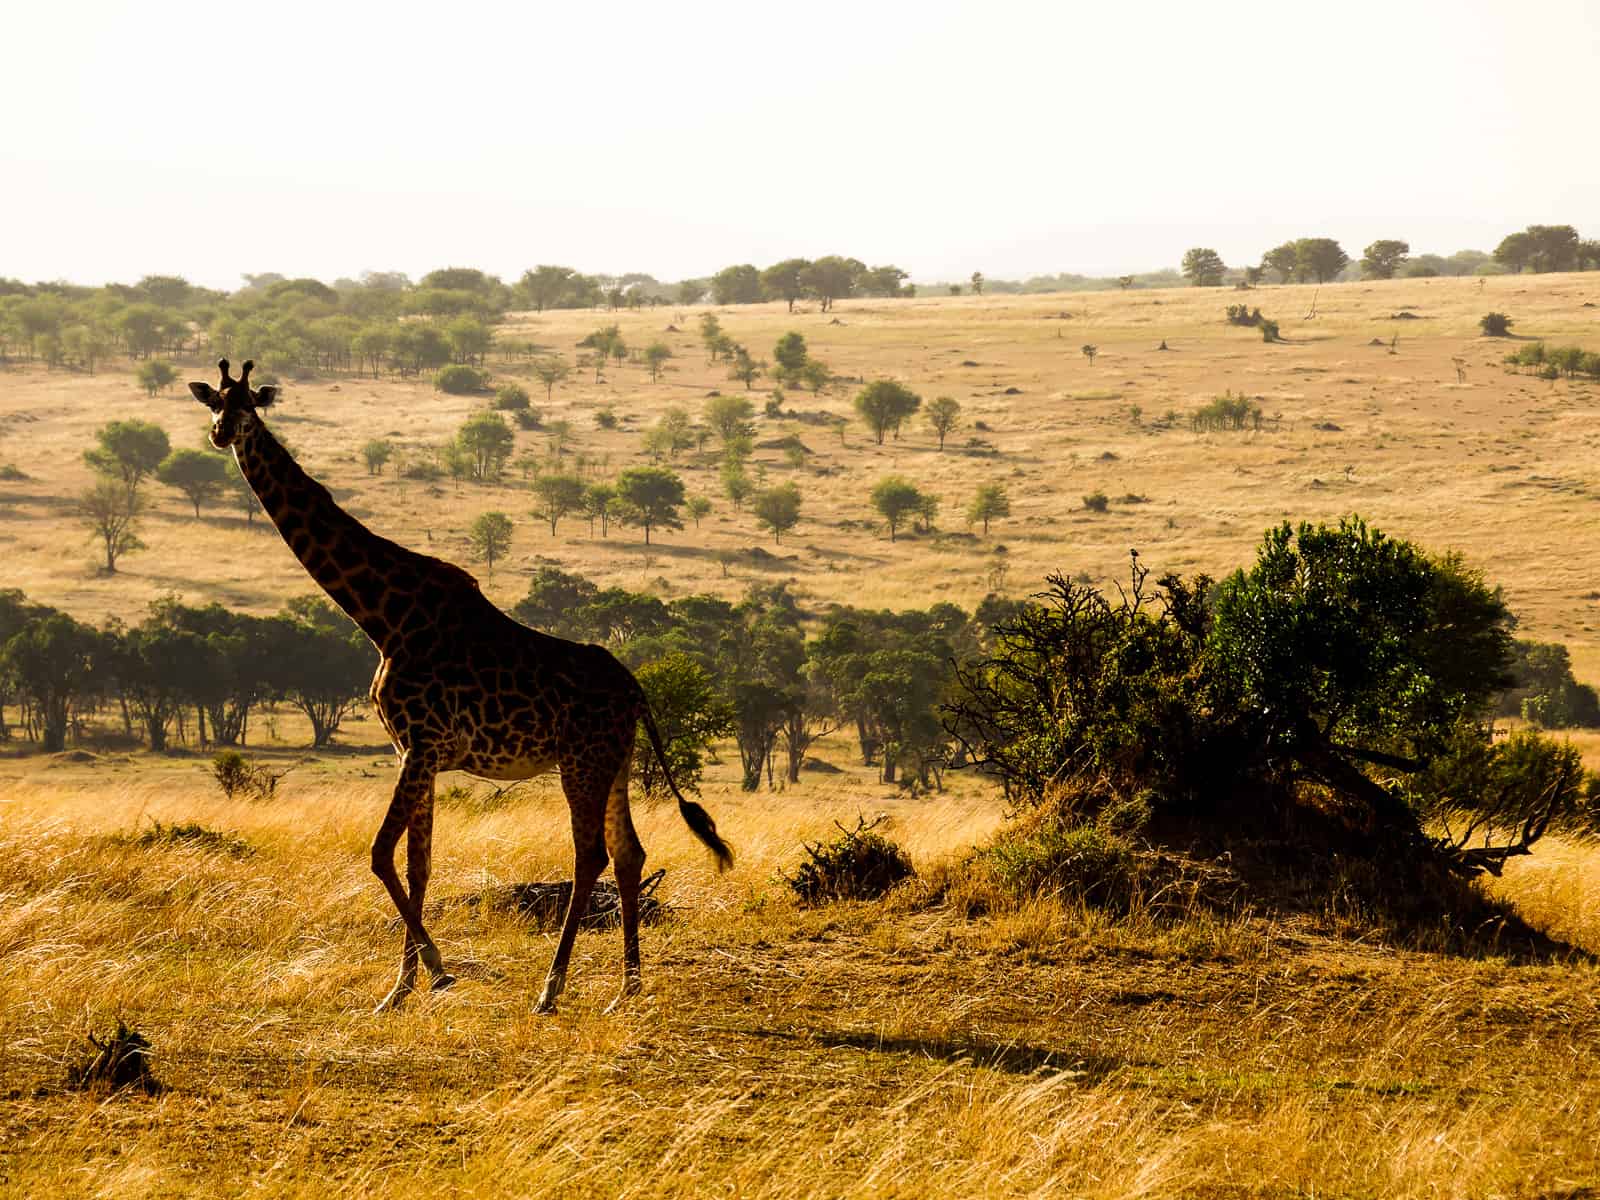 giraffe on serengeti - tanzania honeymoon safari guide